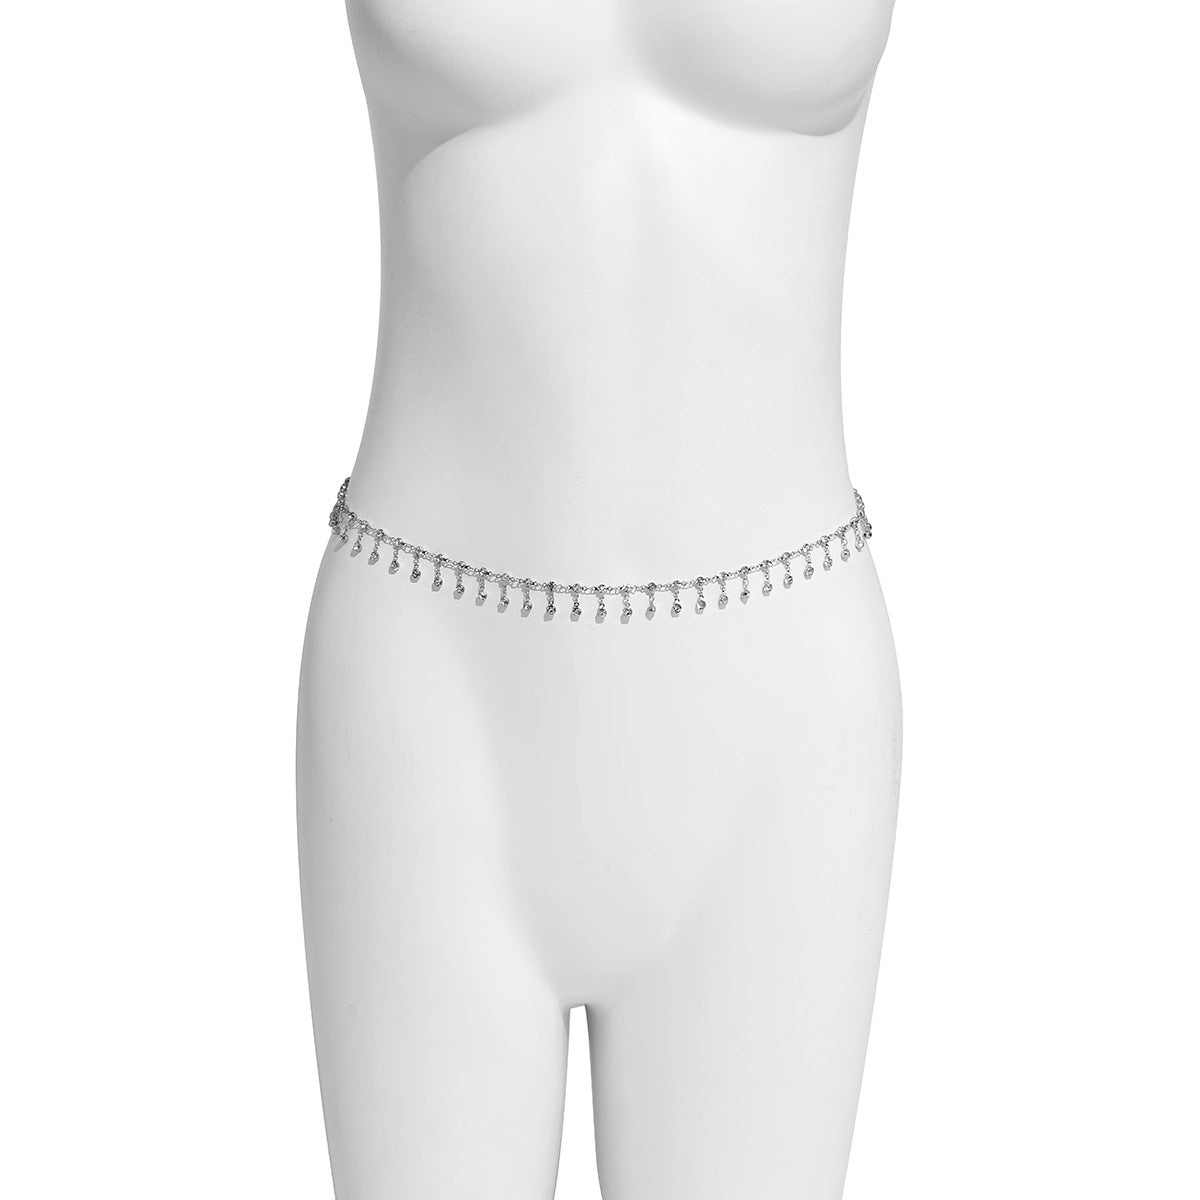 Chic Rhinestone Tassel Bikini Body Chain and Waist Chain Set with Geometric Design